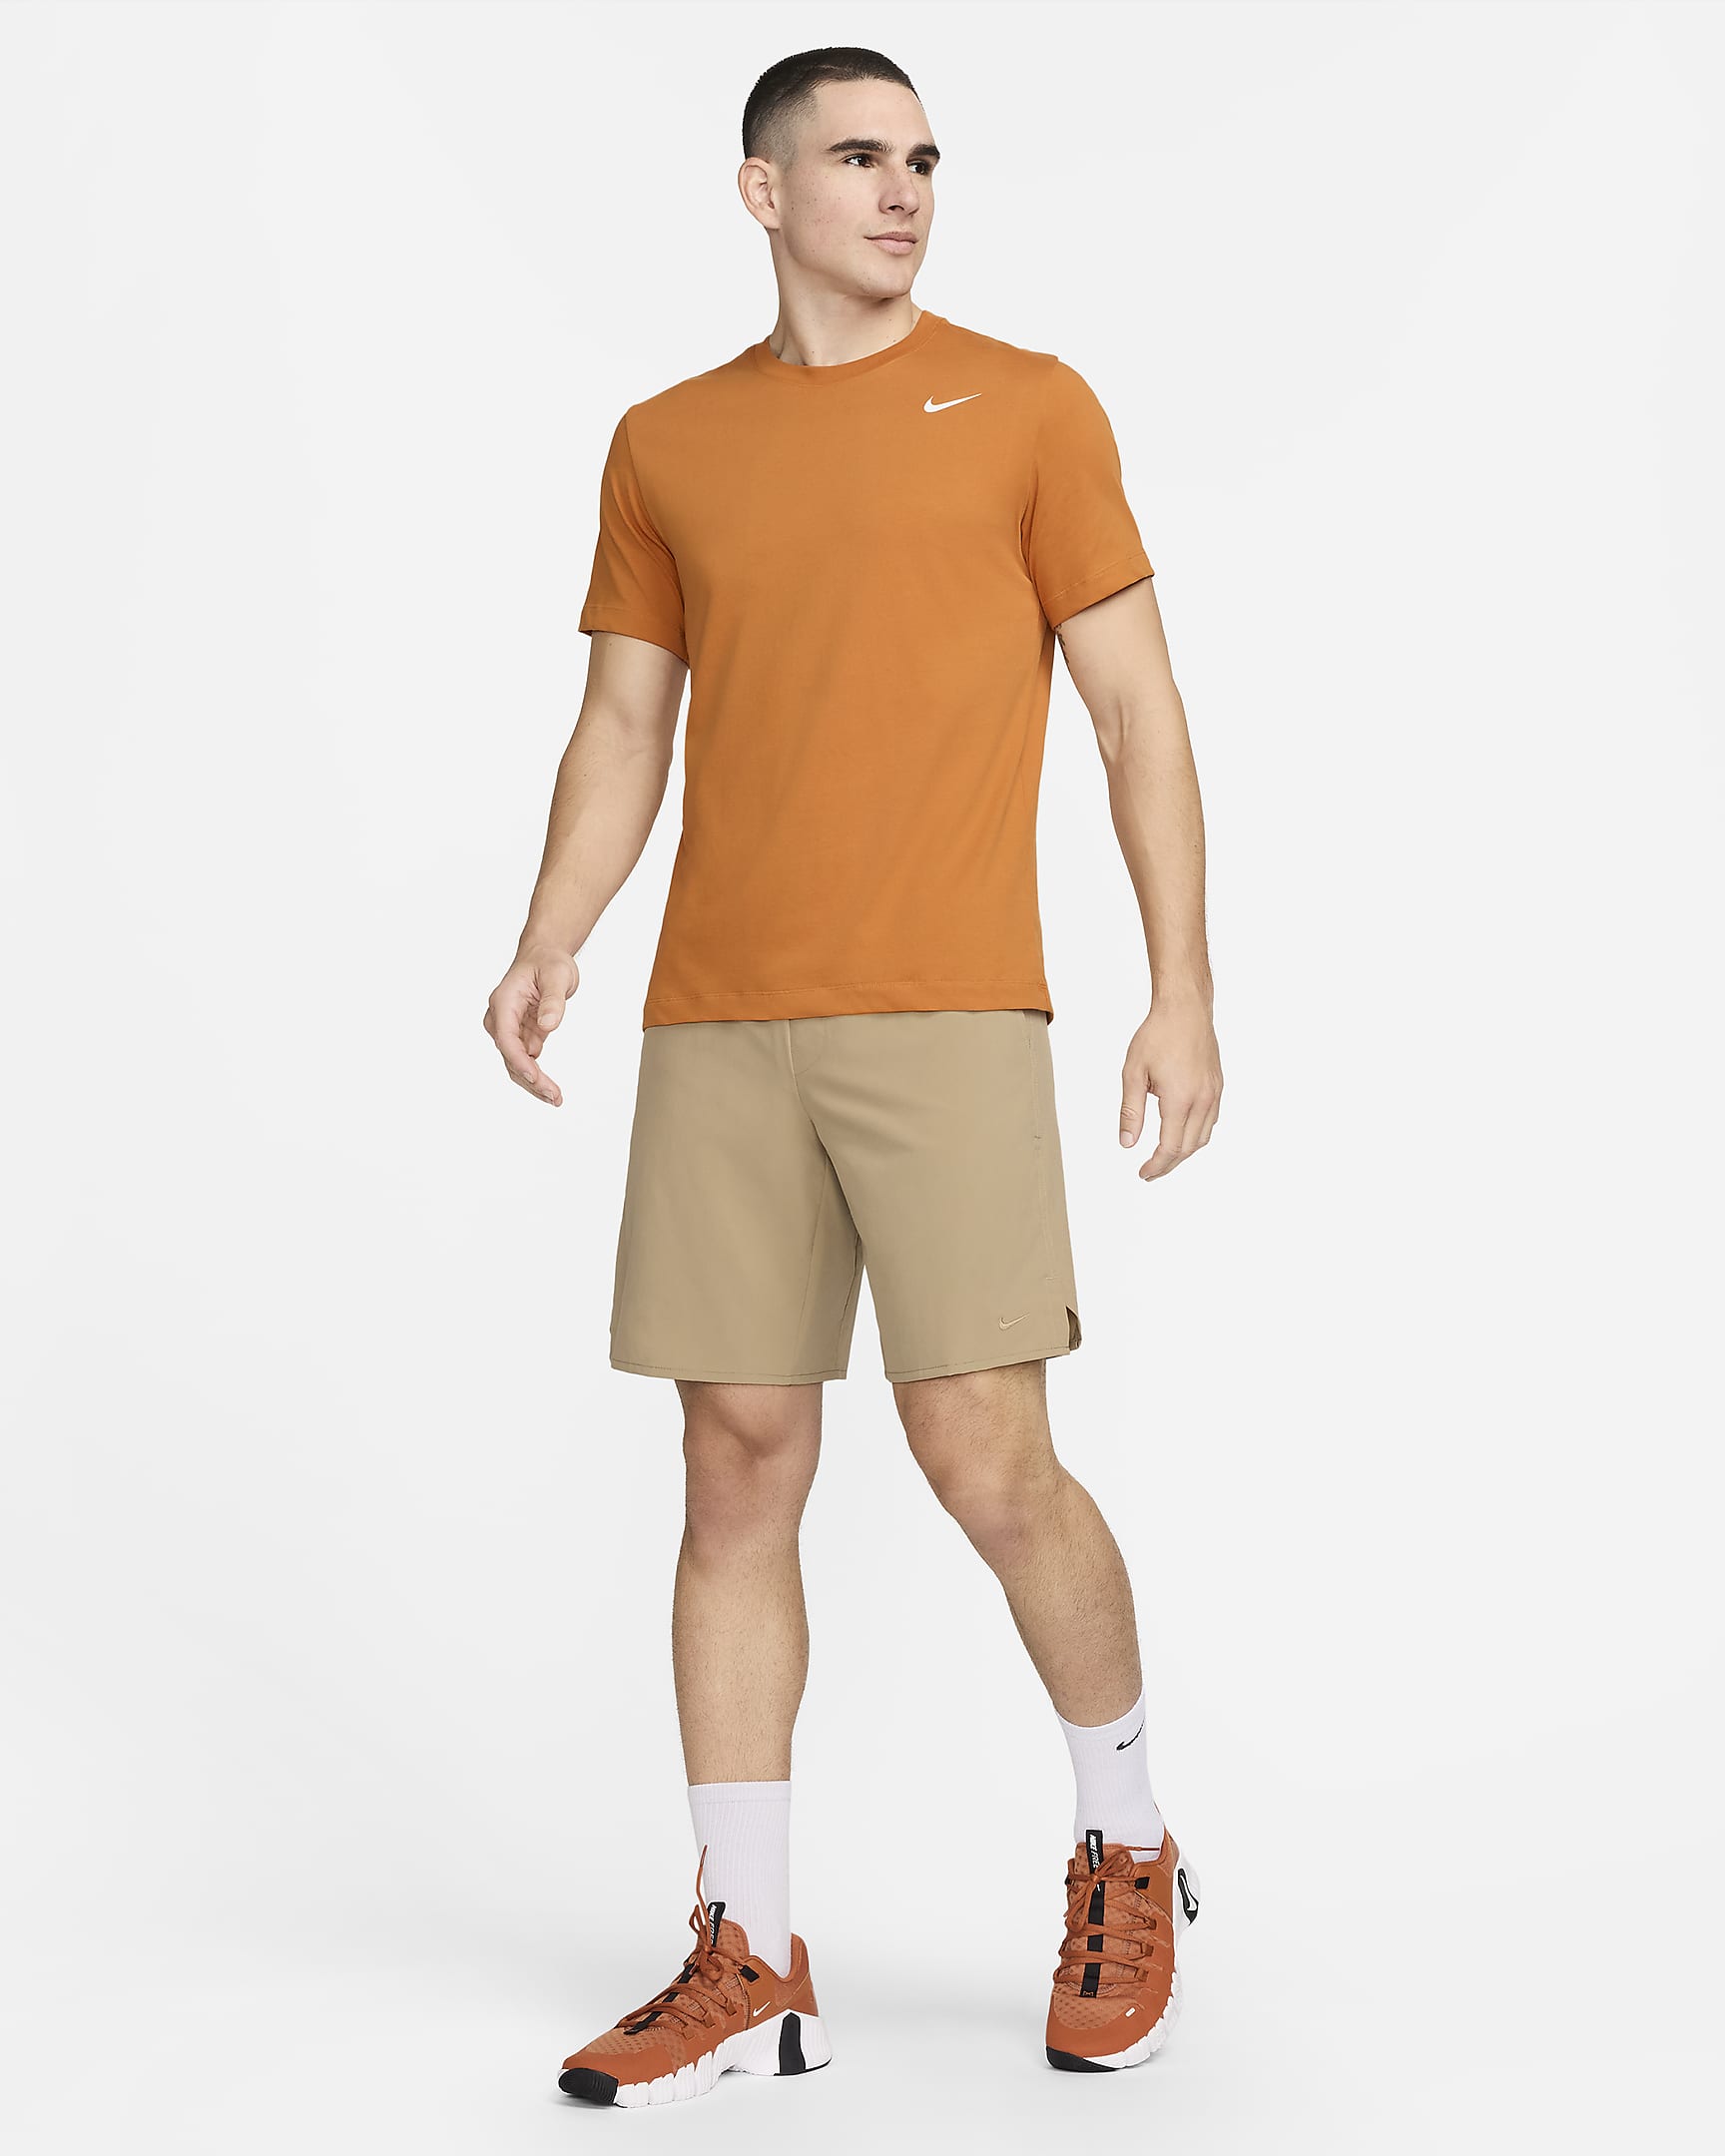 Nike Dri-FIT Camiseta deportiva - Hombre - Monarch